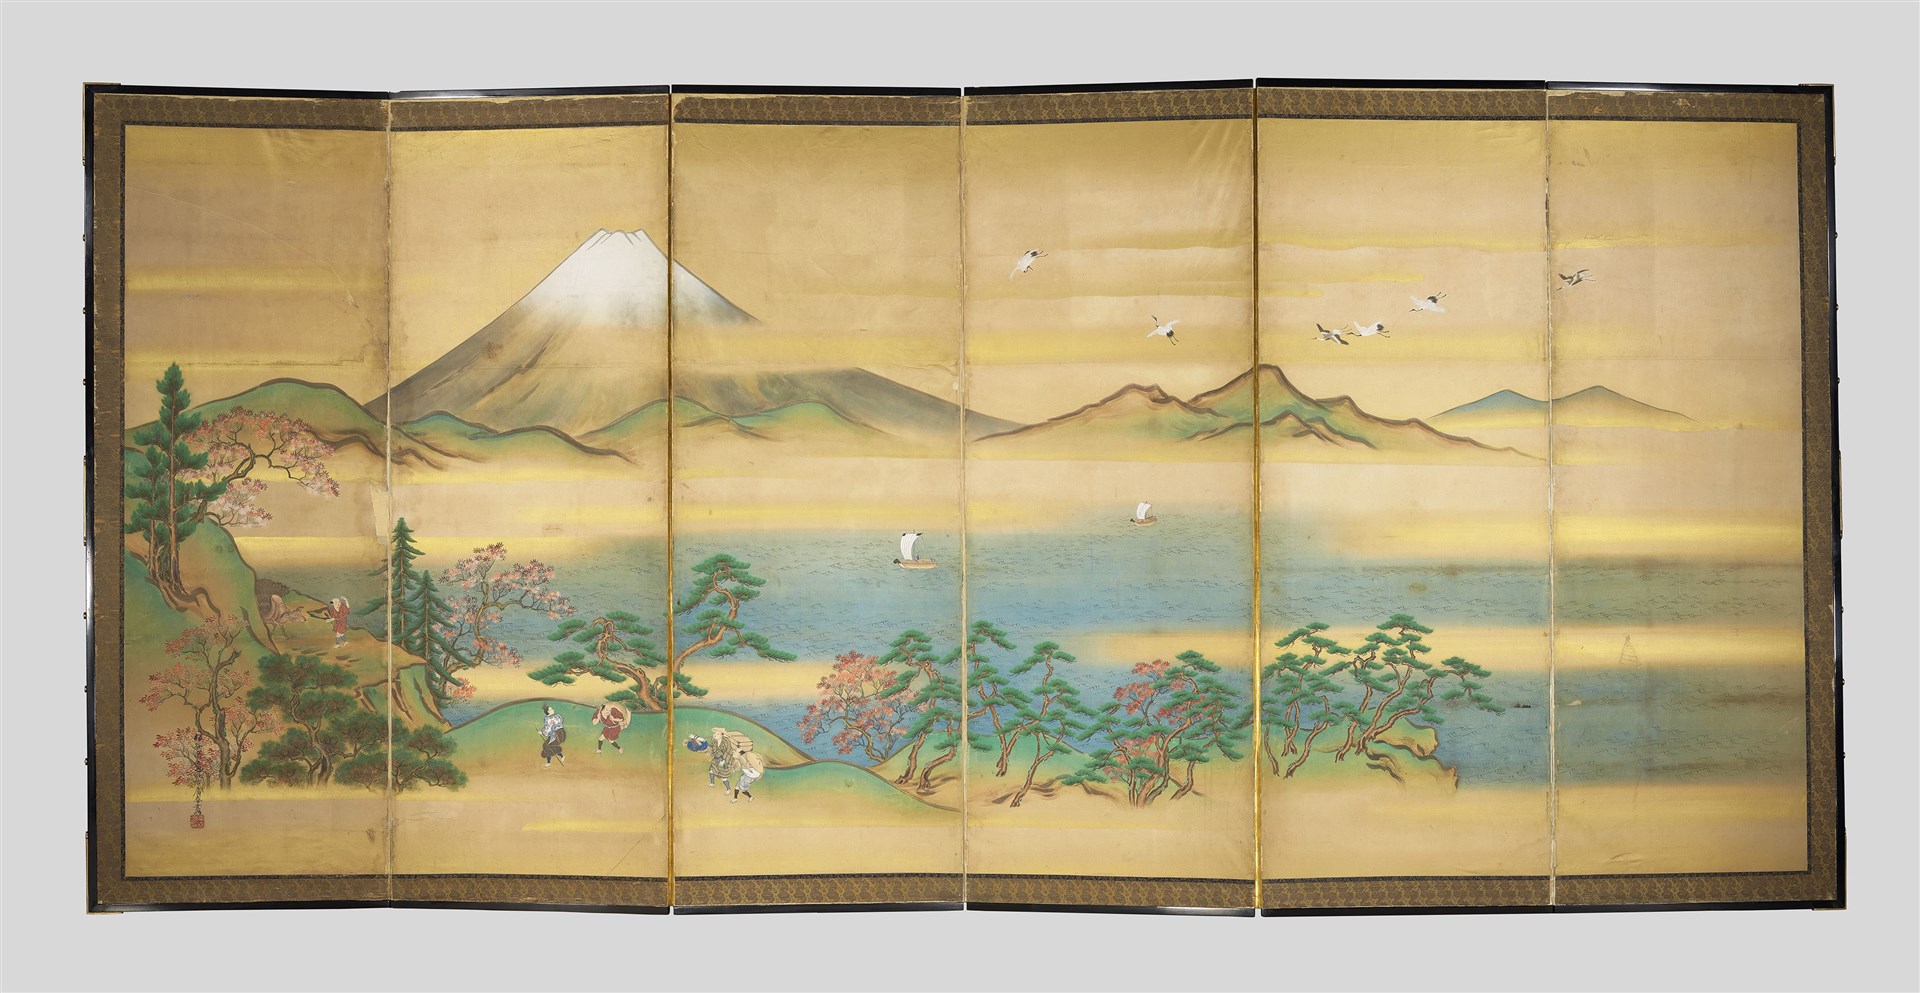 The screen depicting Mount Fuji ((Royal Collection/HM Queen Elizabeth II 2022/PA)